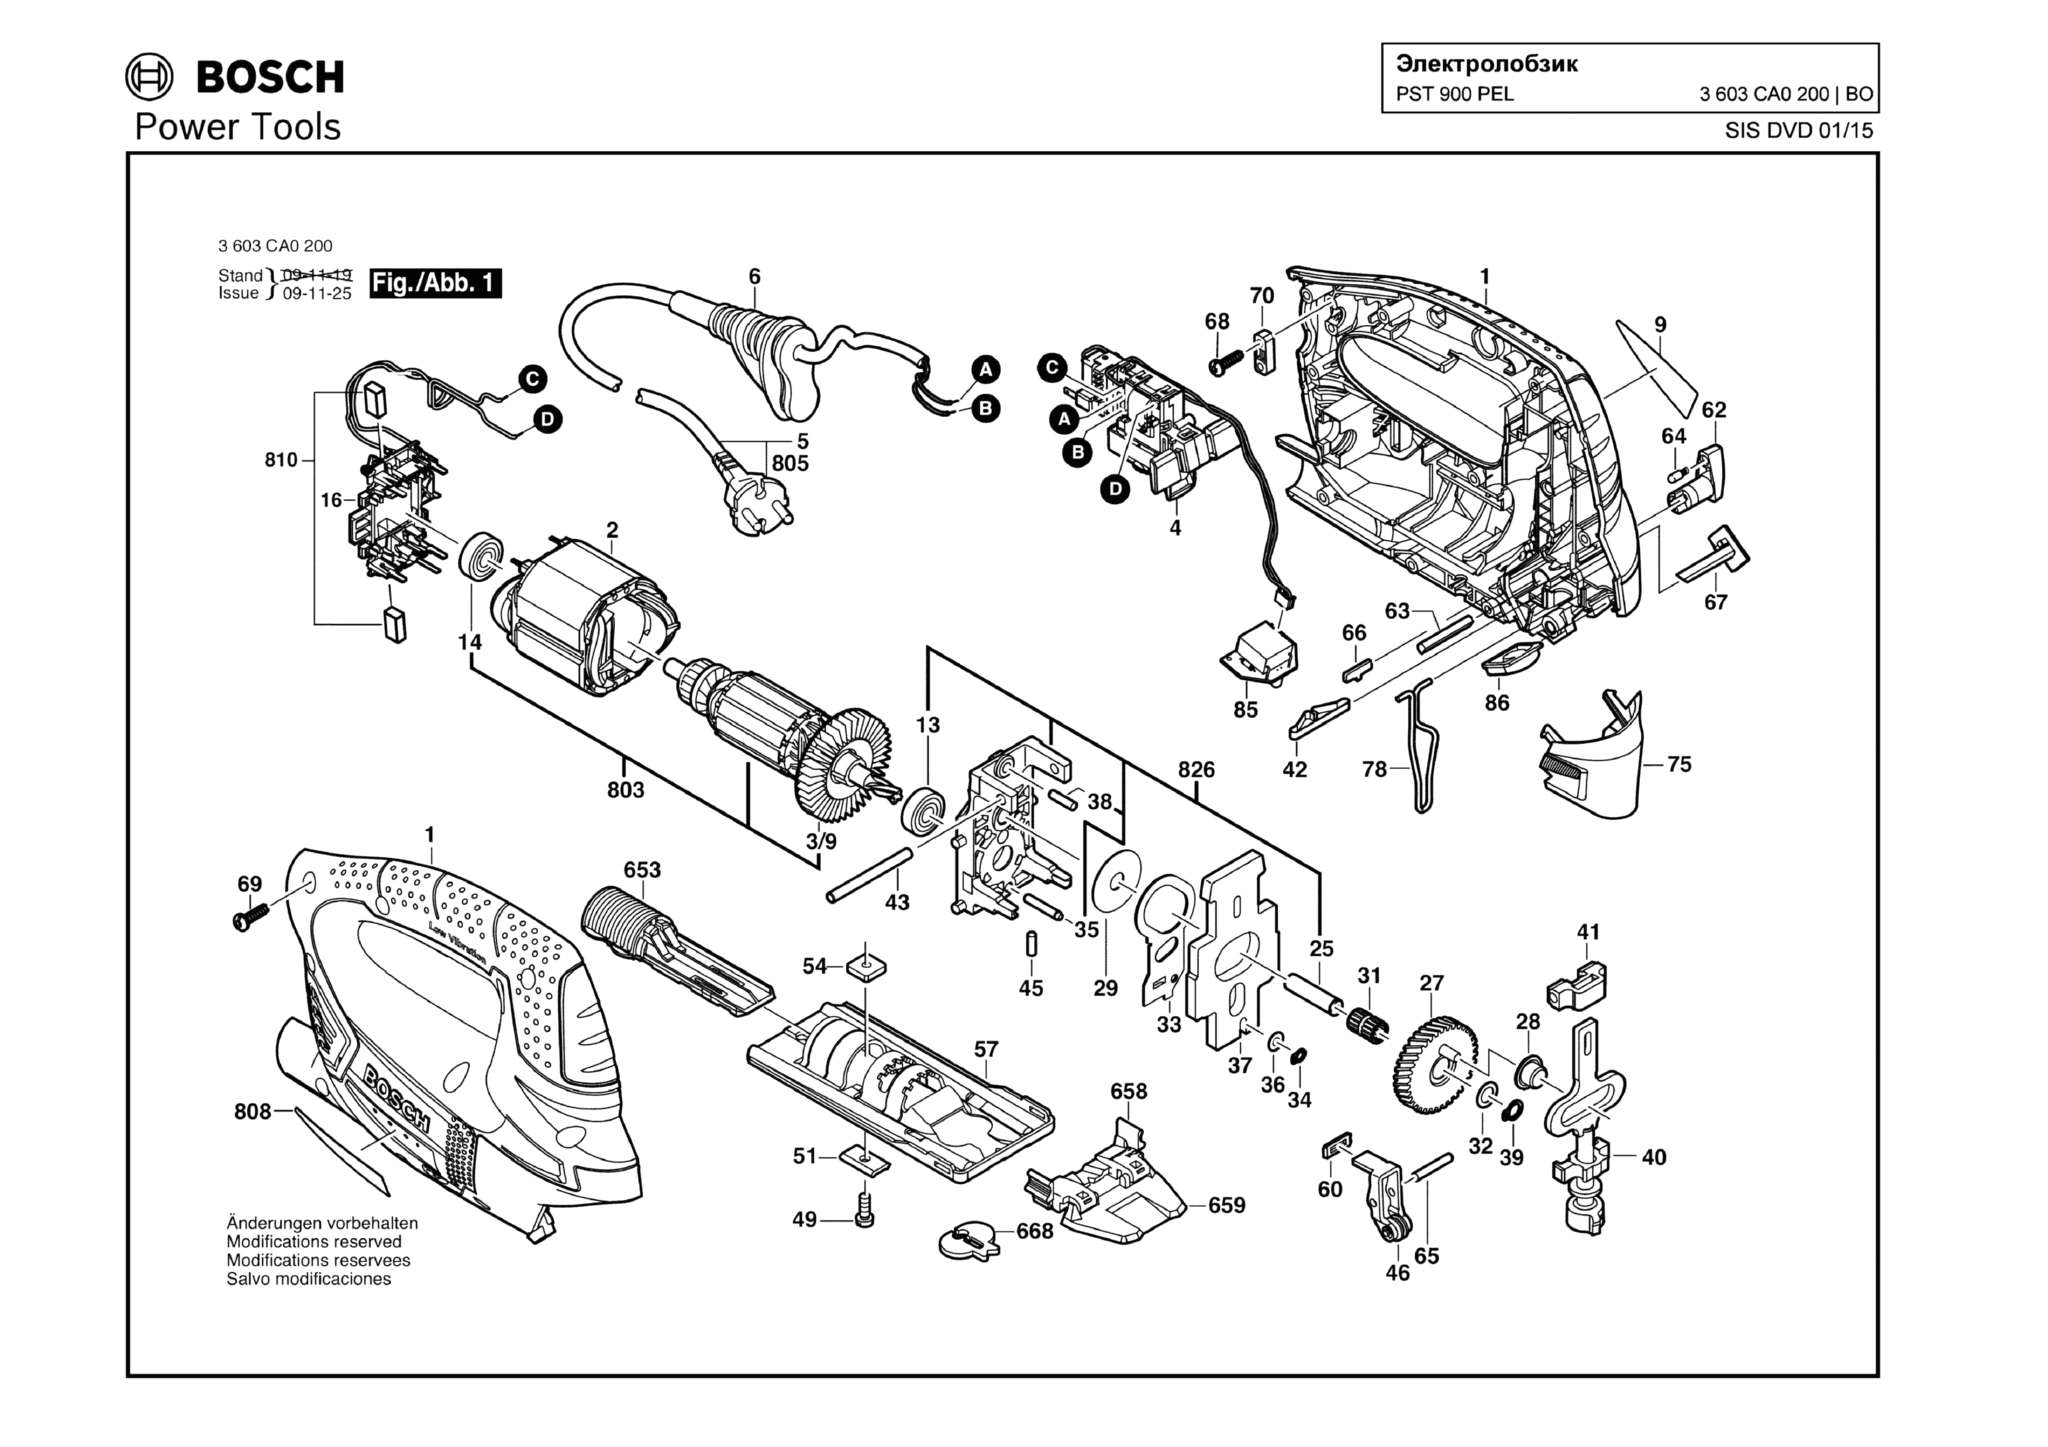 Запчасти, схема и деталировка Bosch PST 900 PEL (ТИП 3603CA0200)